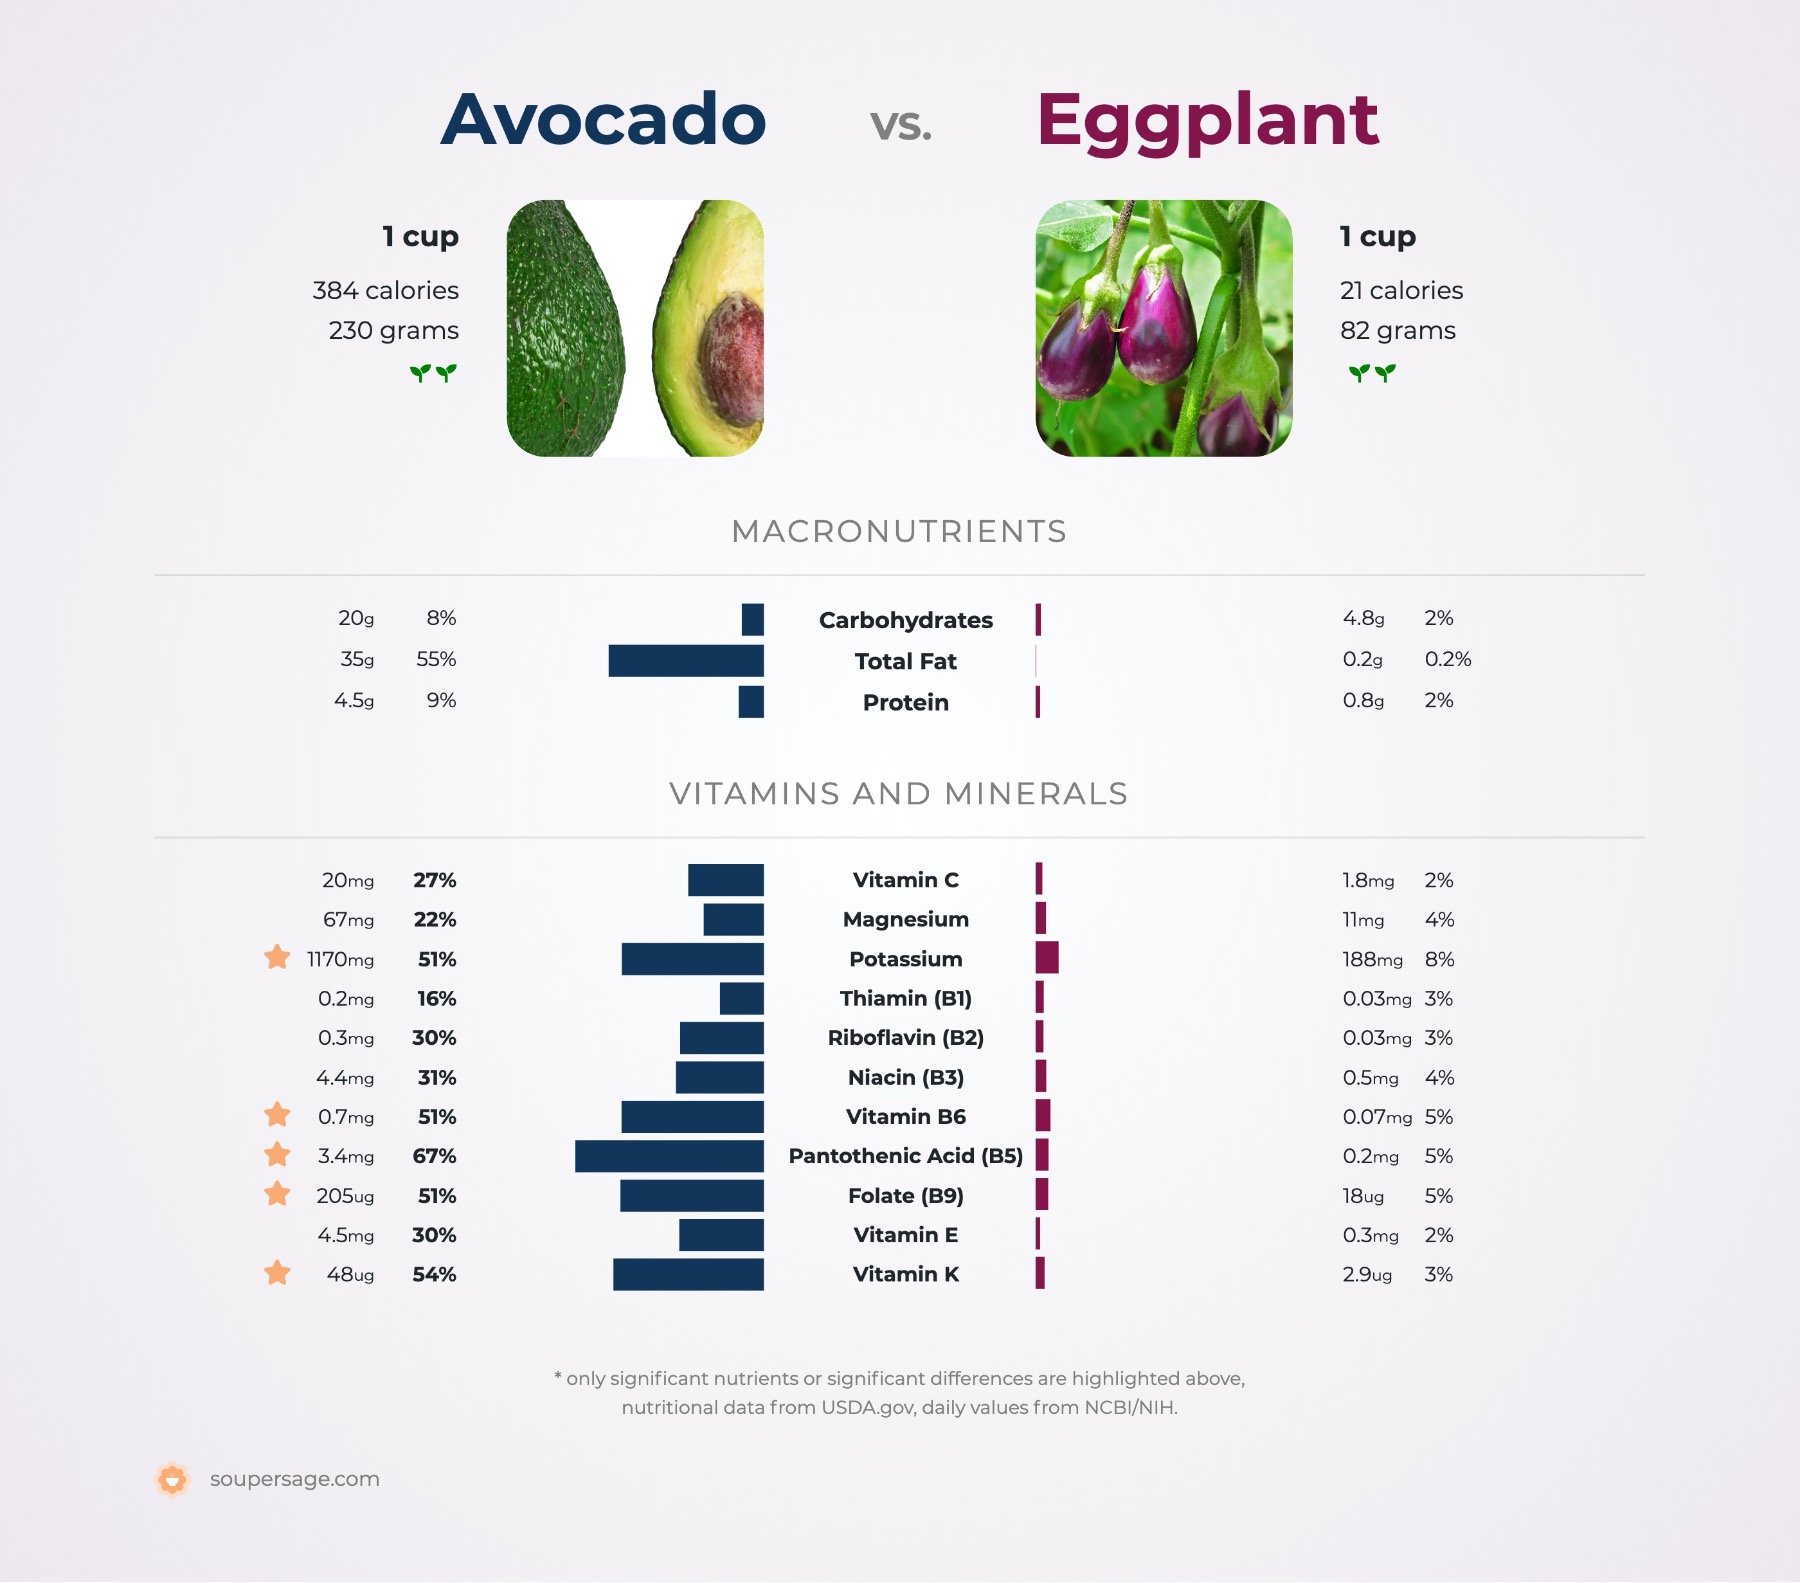 nutrition comparison of avocado vs. eggplant